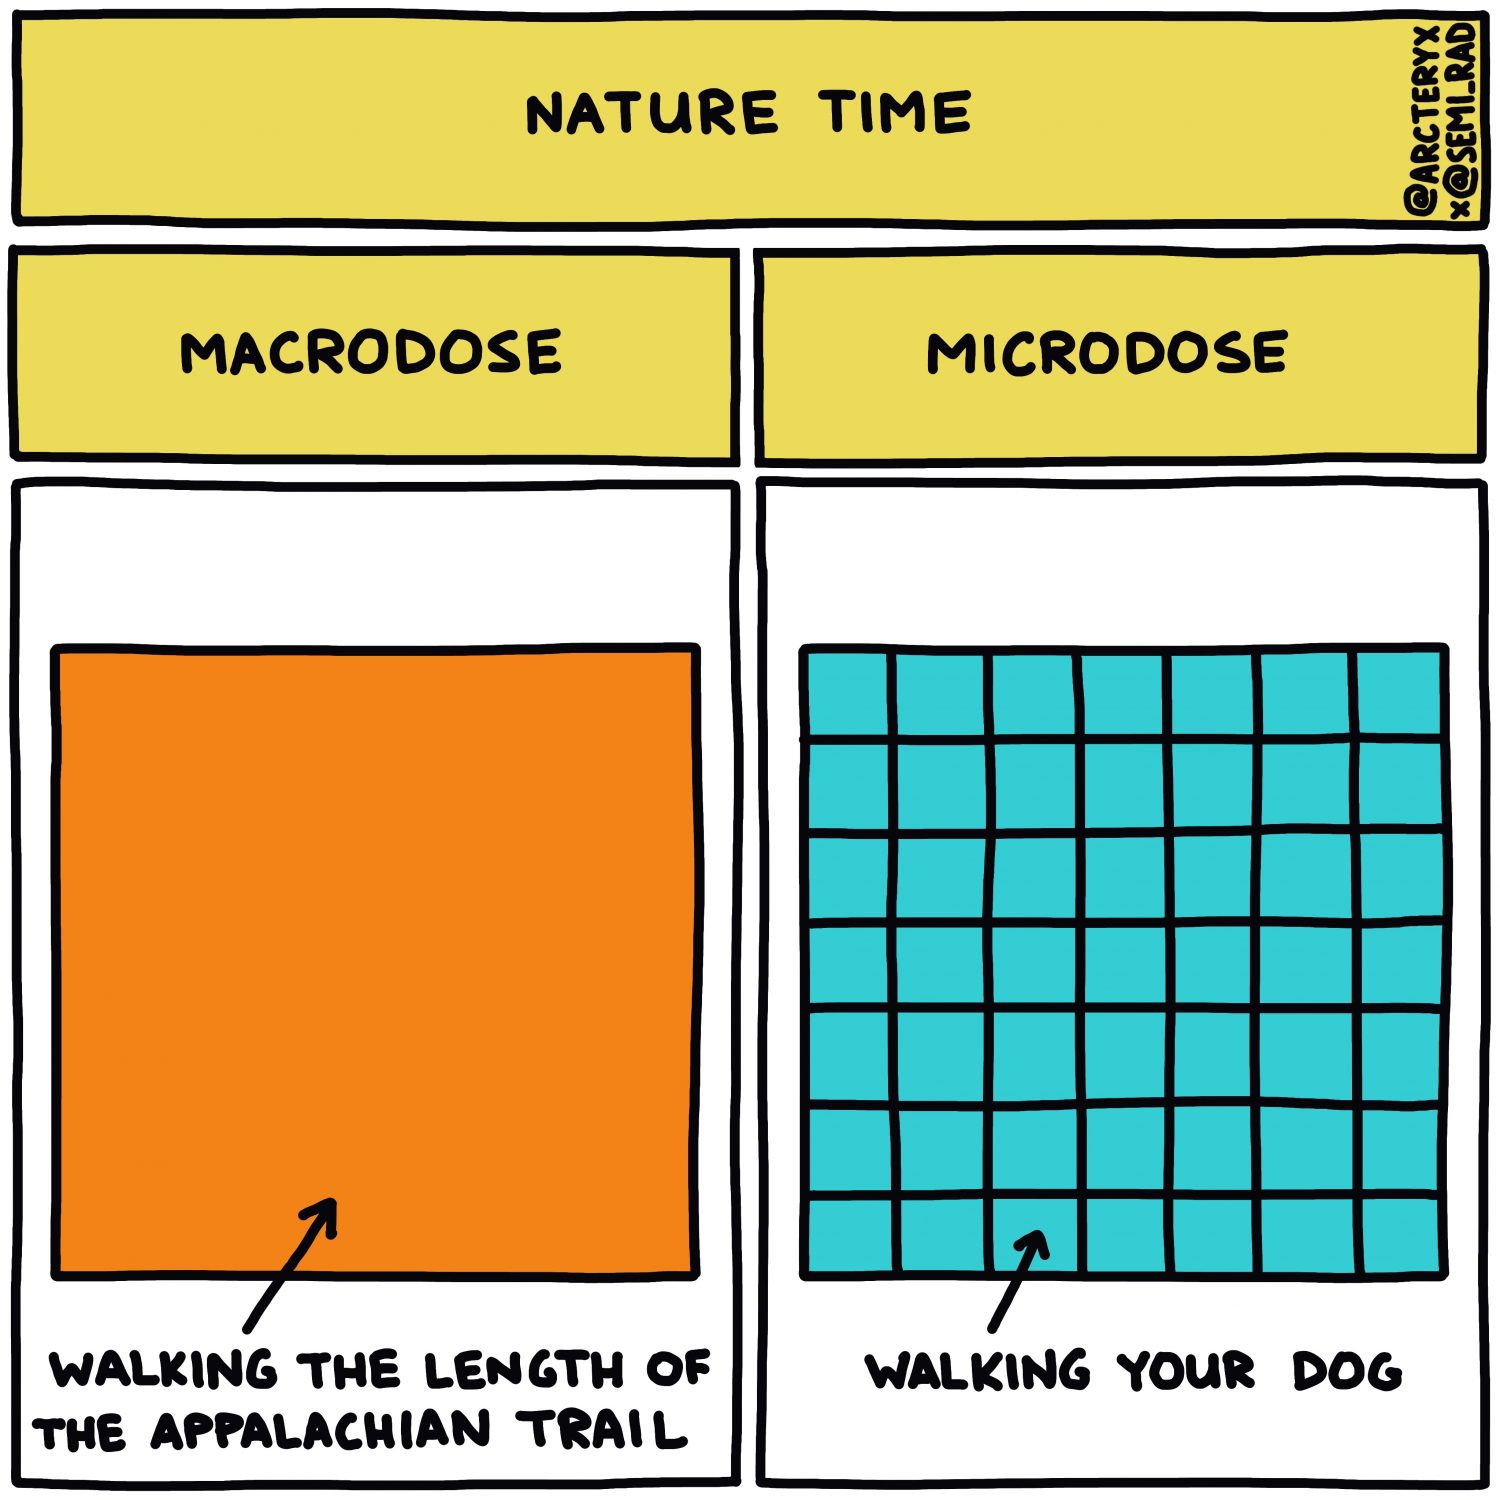 Nature: Macrodoses vs. Microdoses